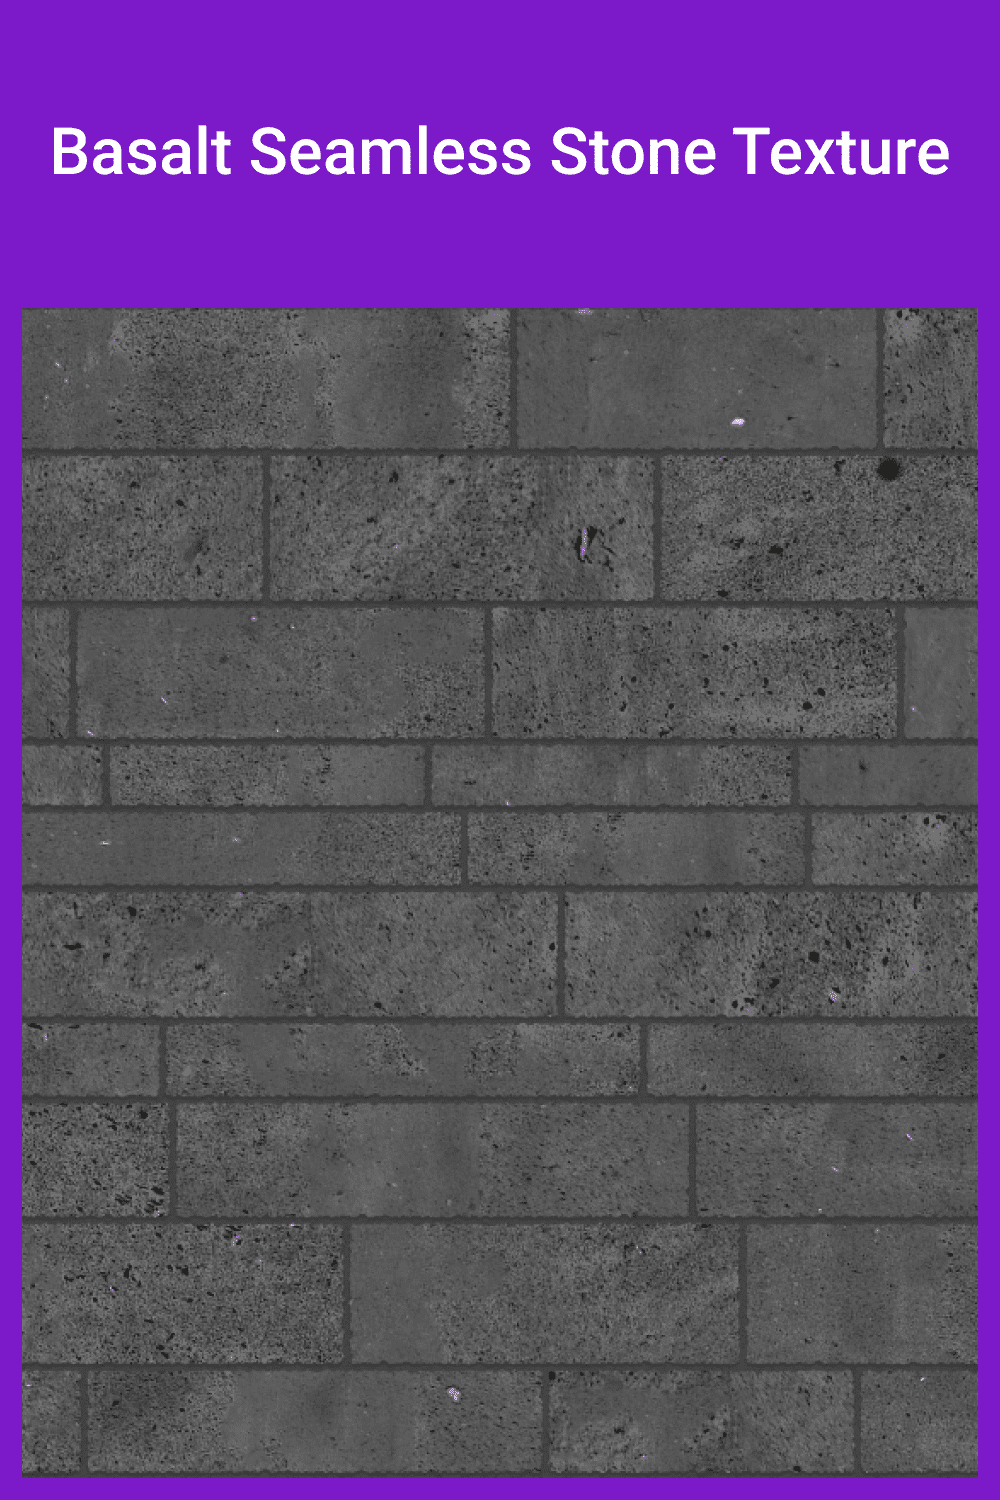 A seamless stone texture with basalt blocks arranged in a ashlar pattern.